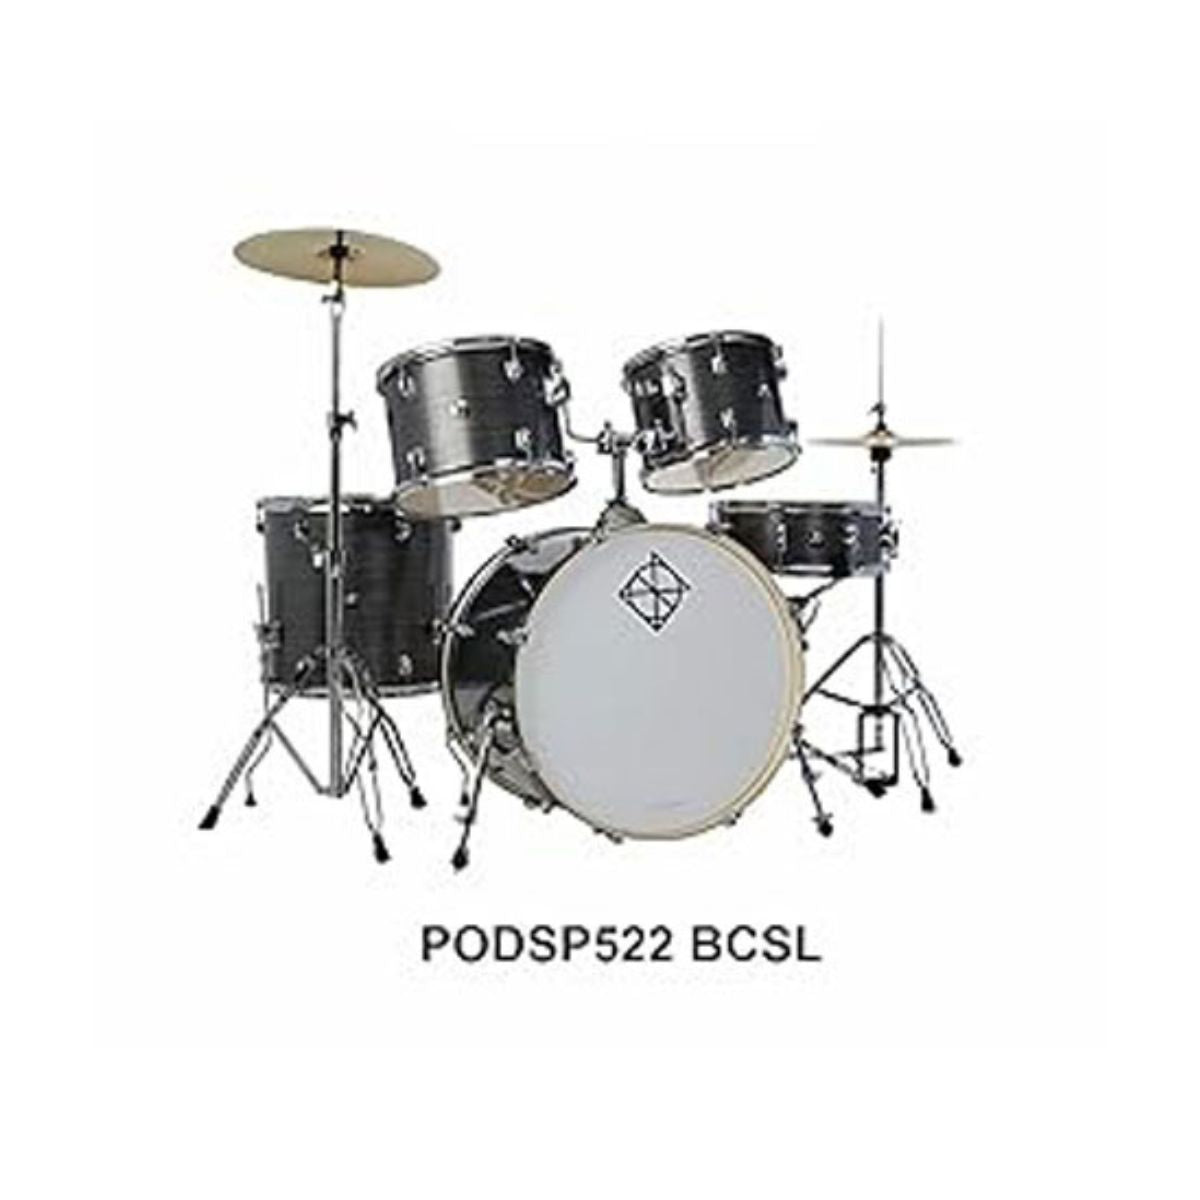 Dixon Spark Series Acoustic Drum (full kit) 5PCs Set incl Hardware - Cyclone Silver